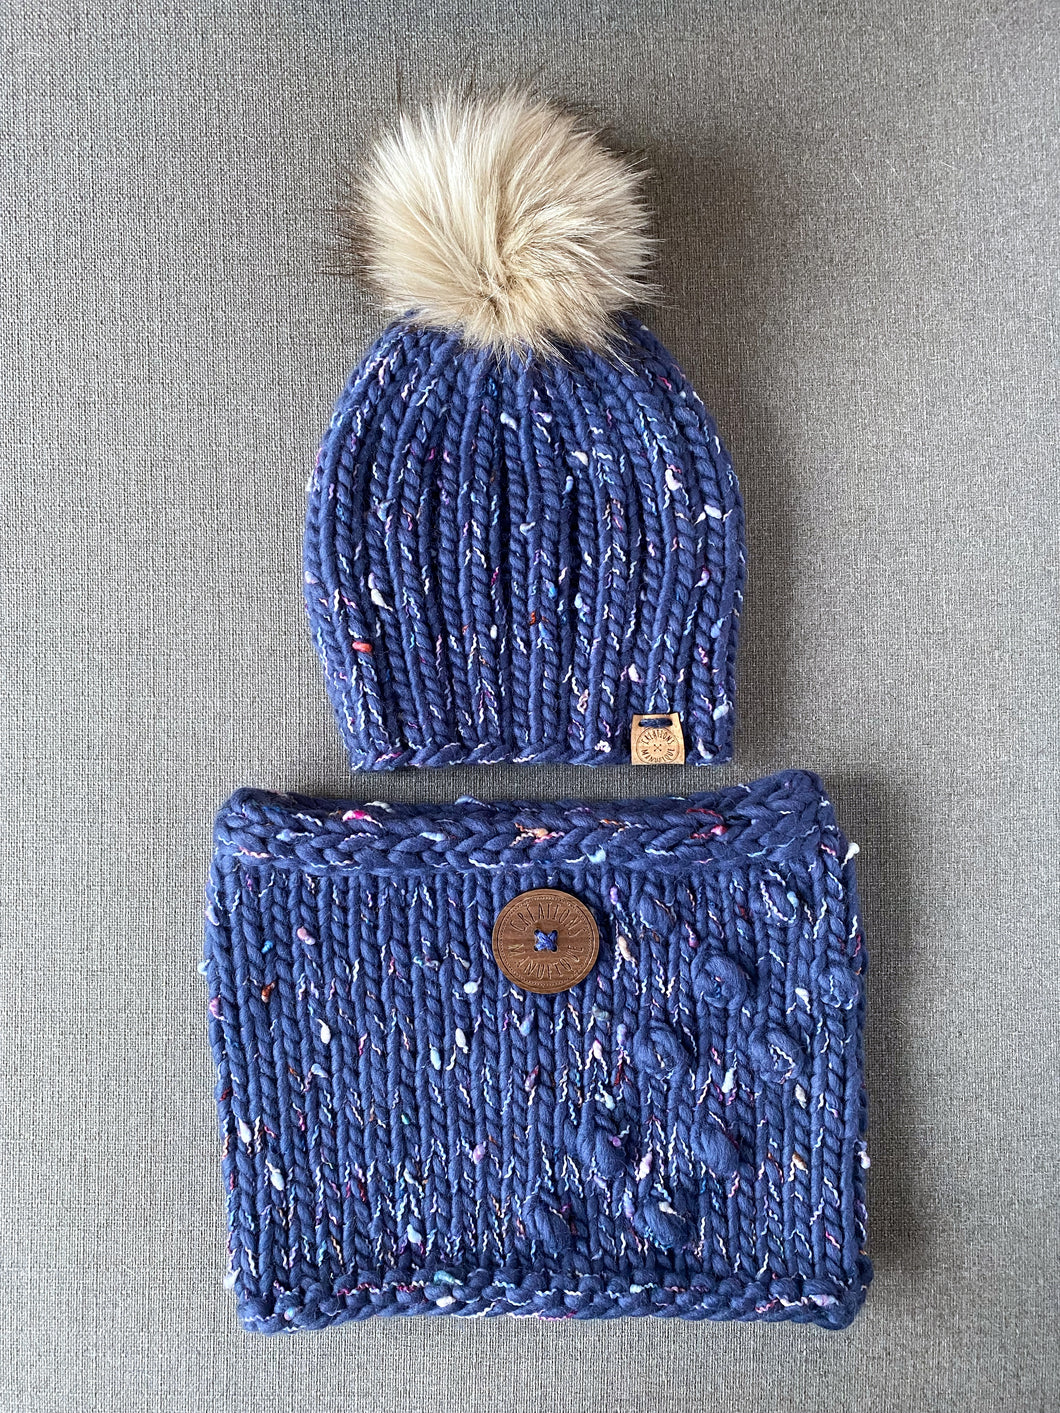 Blue merino wool neck warmer - Unique creation - Ready to ship